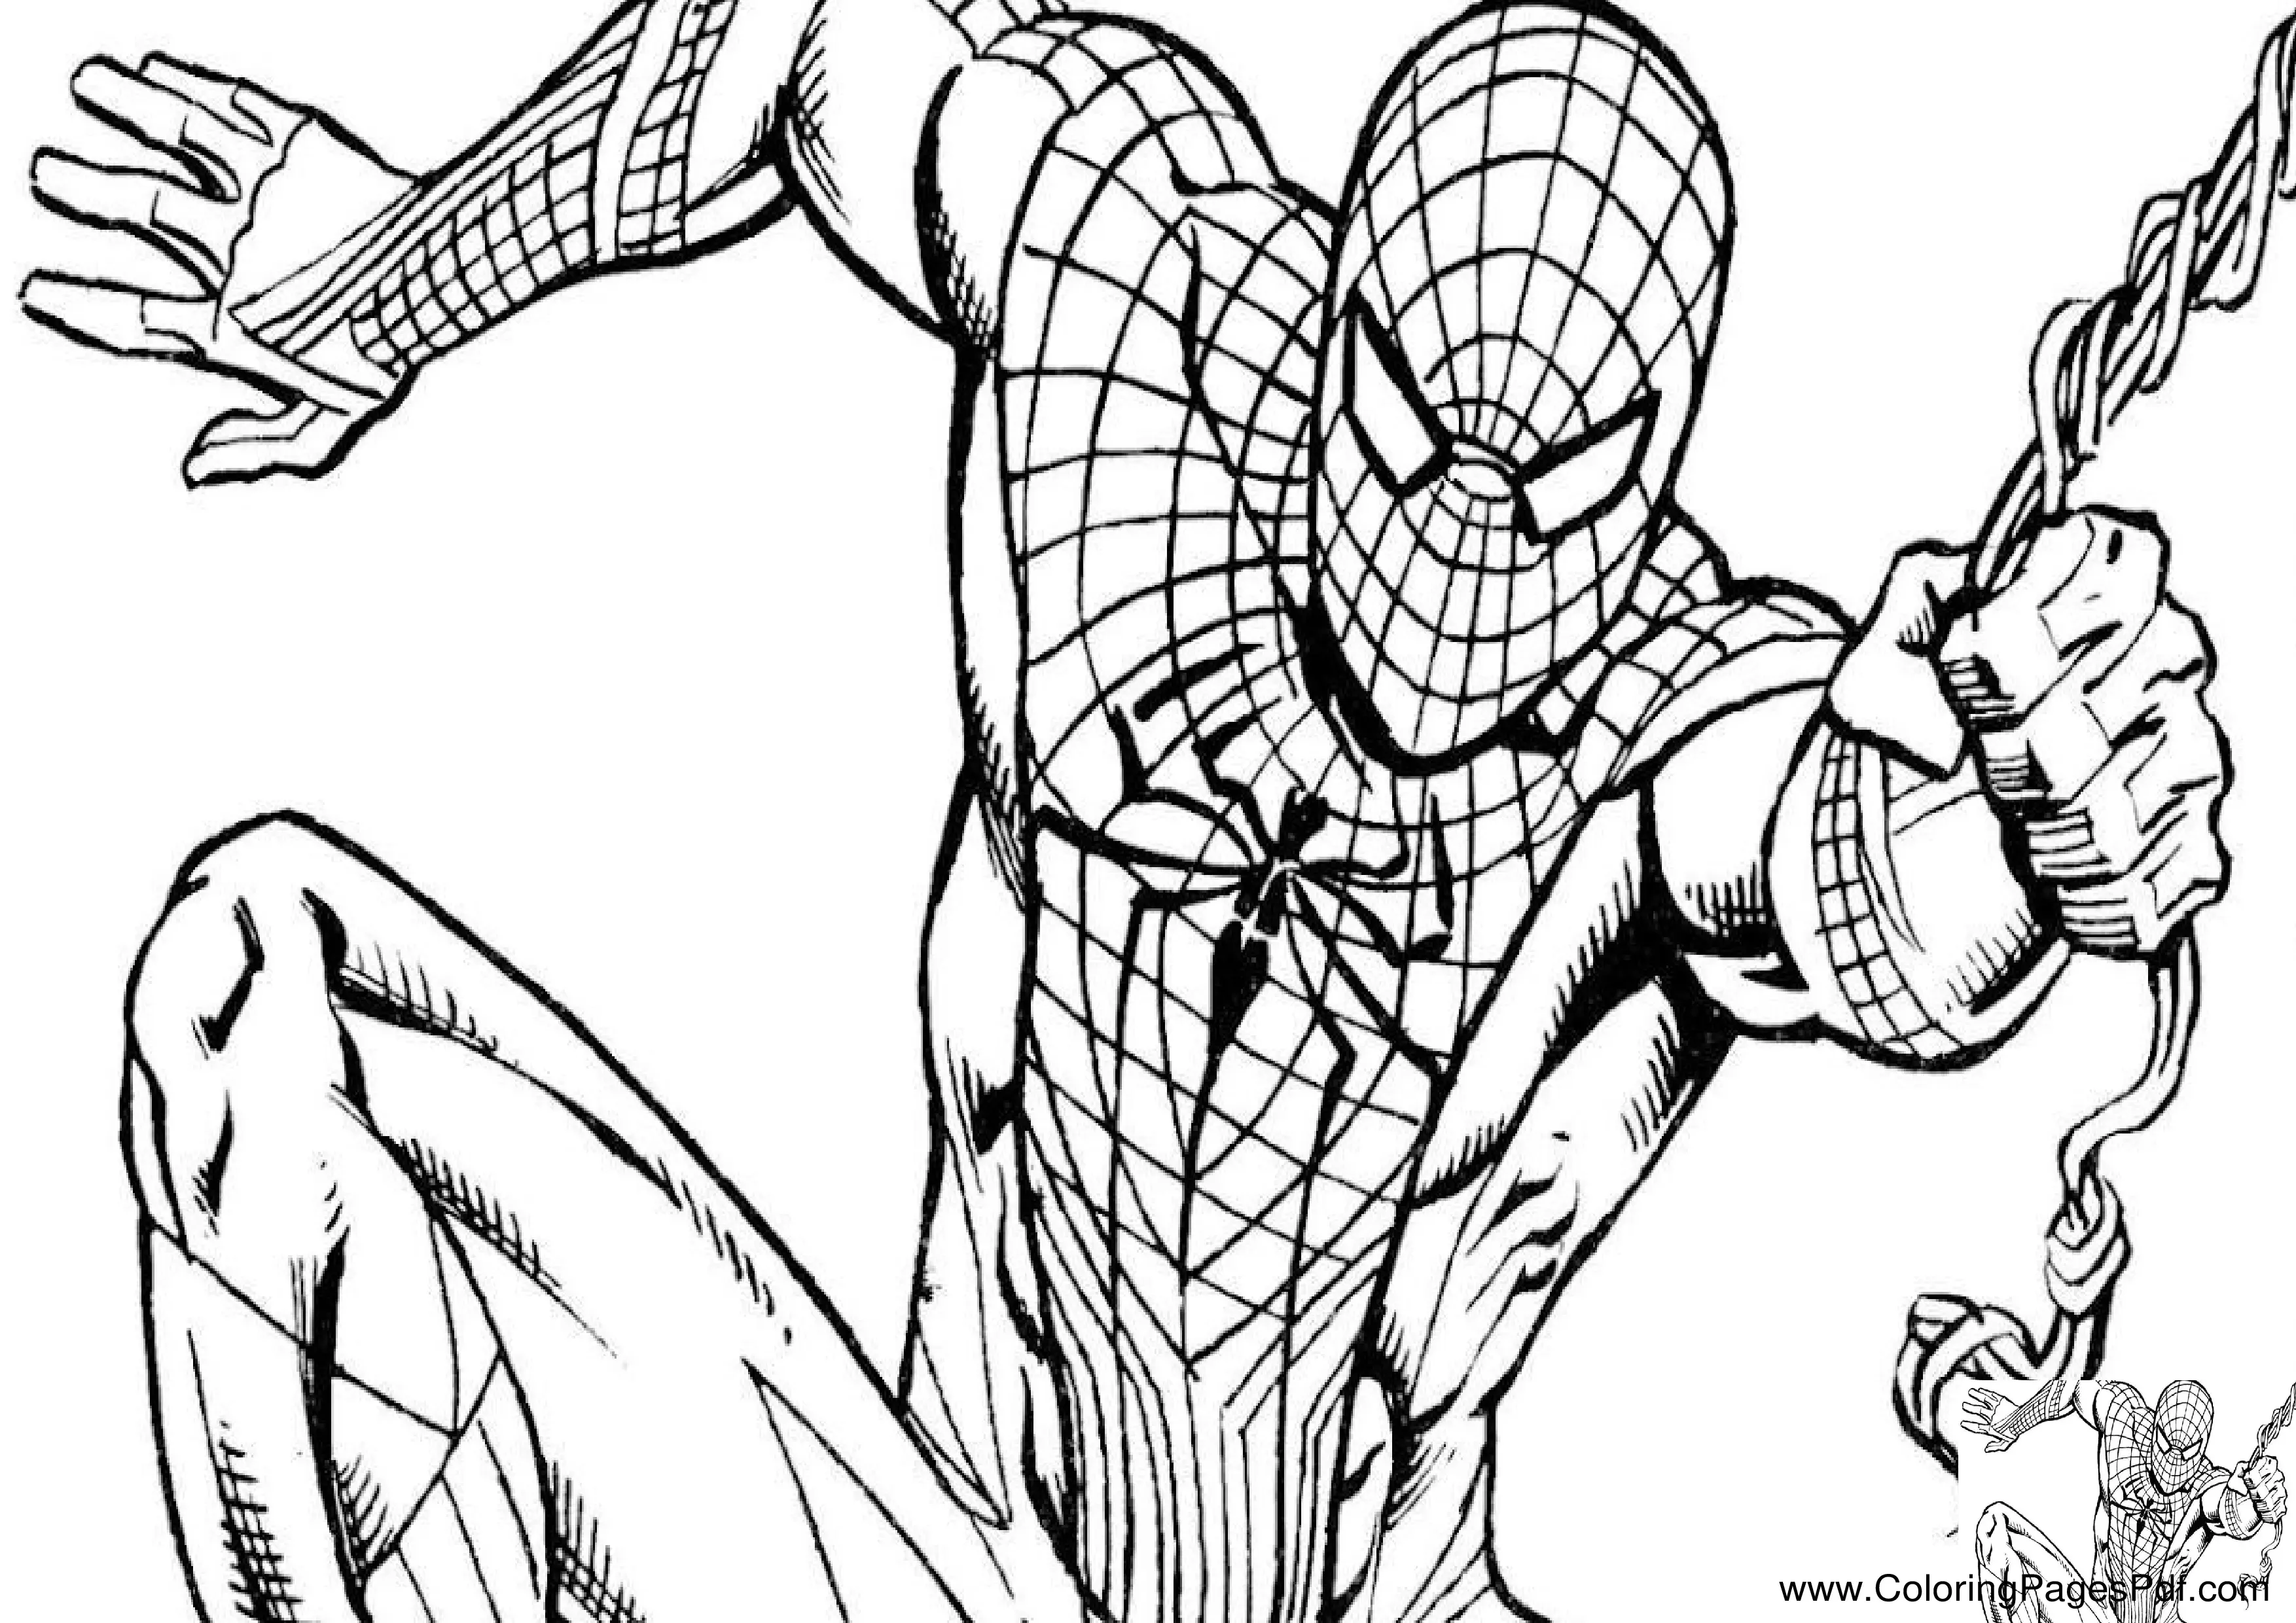 Spiderman color page